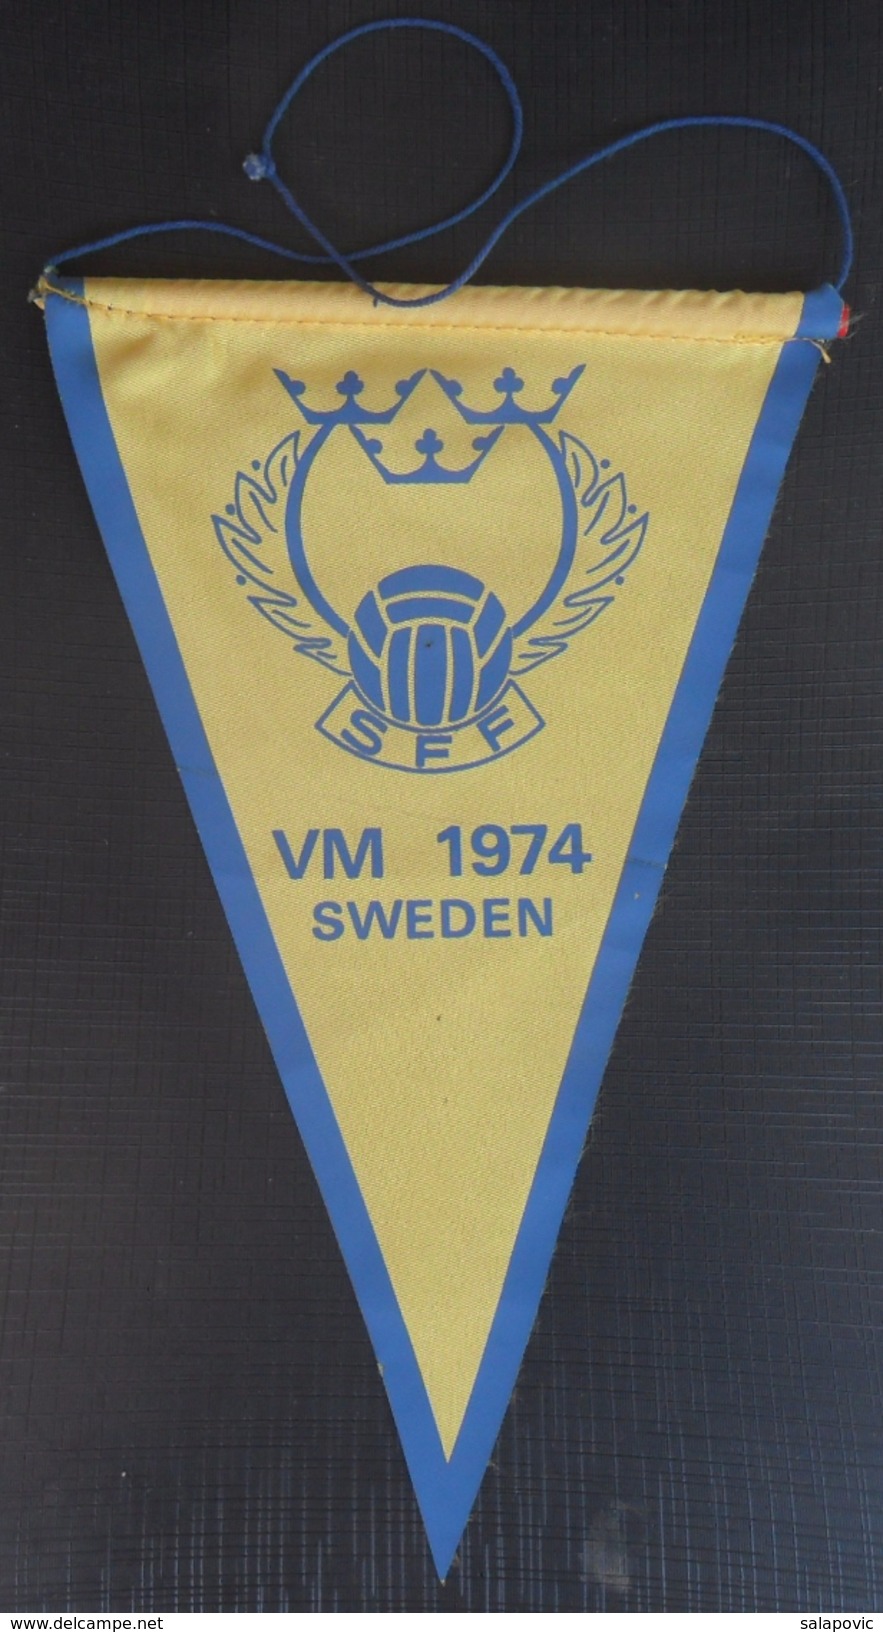 Sweden Football Federation VM 1974, World Cup Germany  FOOTBALL CLUB, SOCCER / FUTBOL / CALCIO, OLD PENNANT, SPORTS FLAG - Apparel, Souvenirs & Other